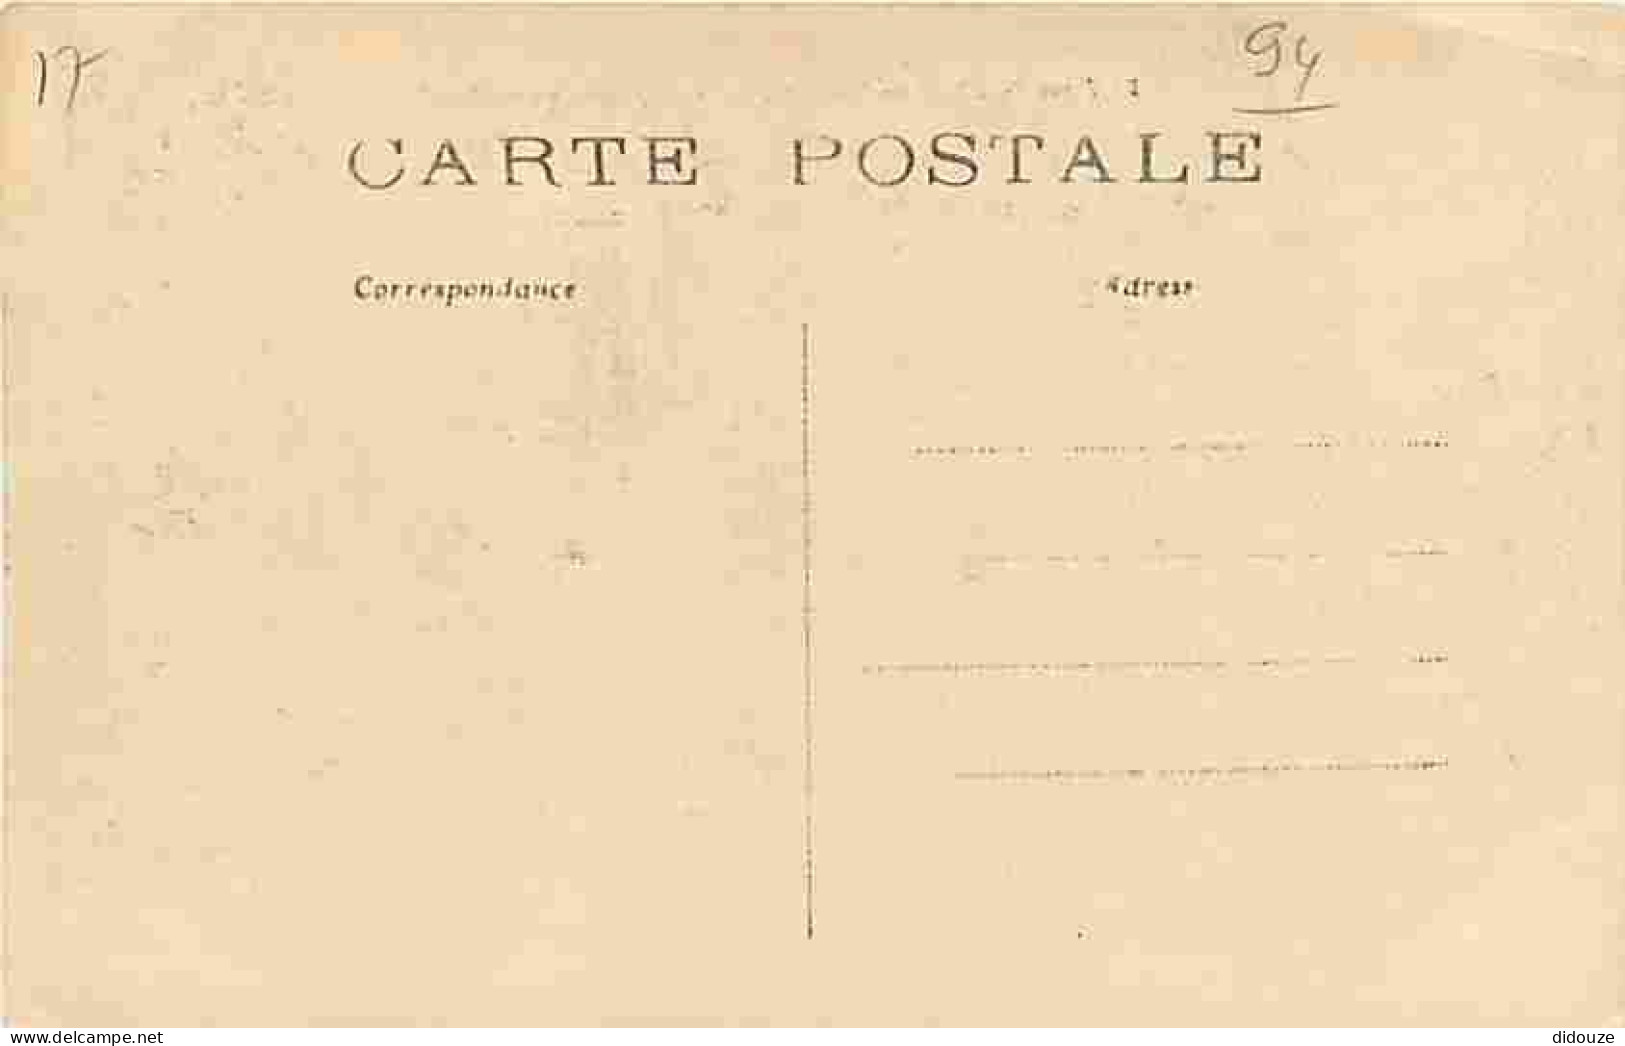 94 - Bry Sur Marne - Inondations De Janvier 1910 - Rue Daguerre - CPA - Voir Scans Recto-Verso - Bry Sur Marne